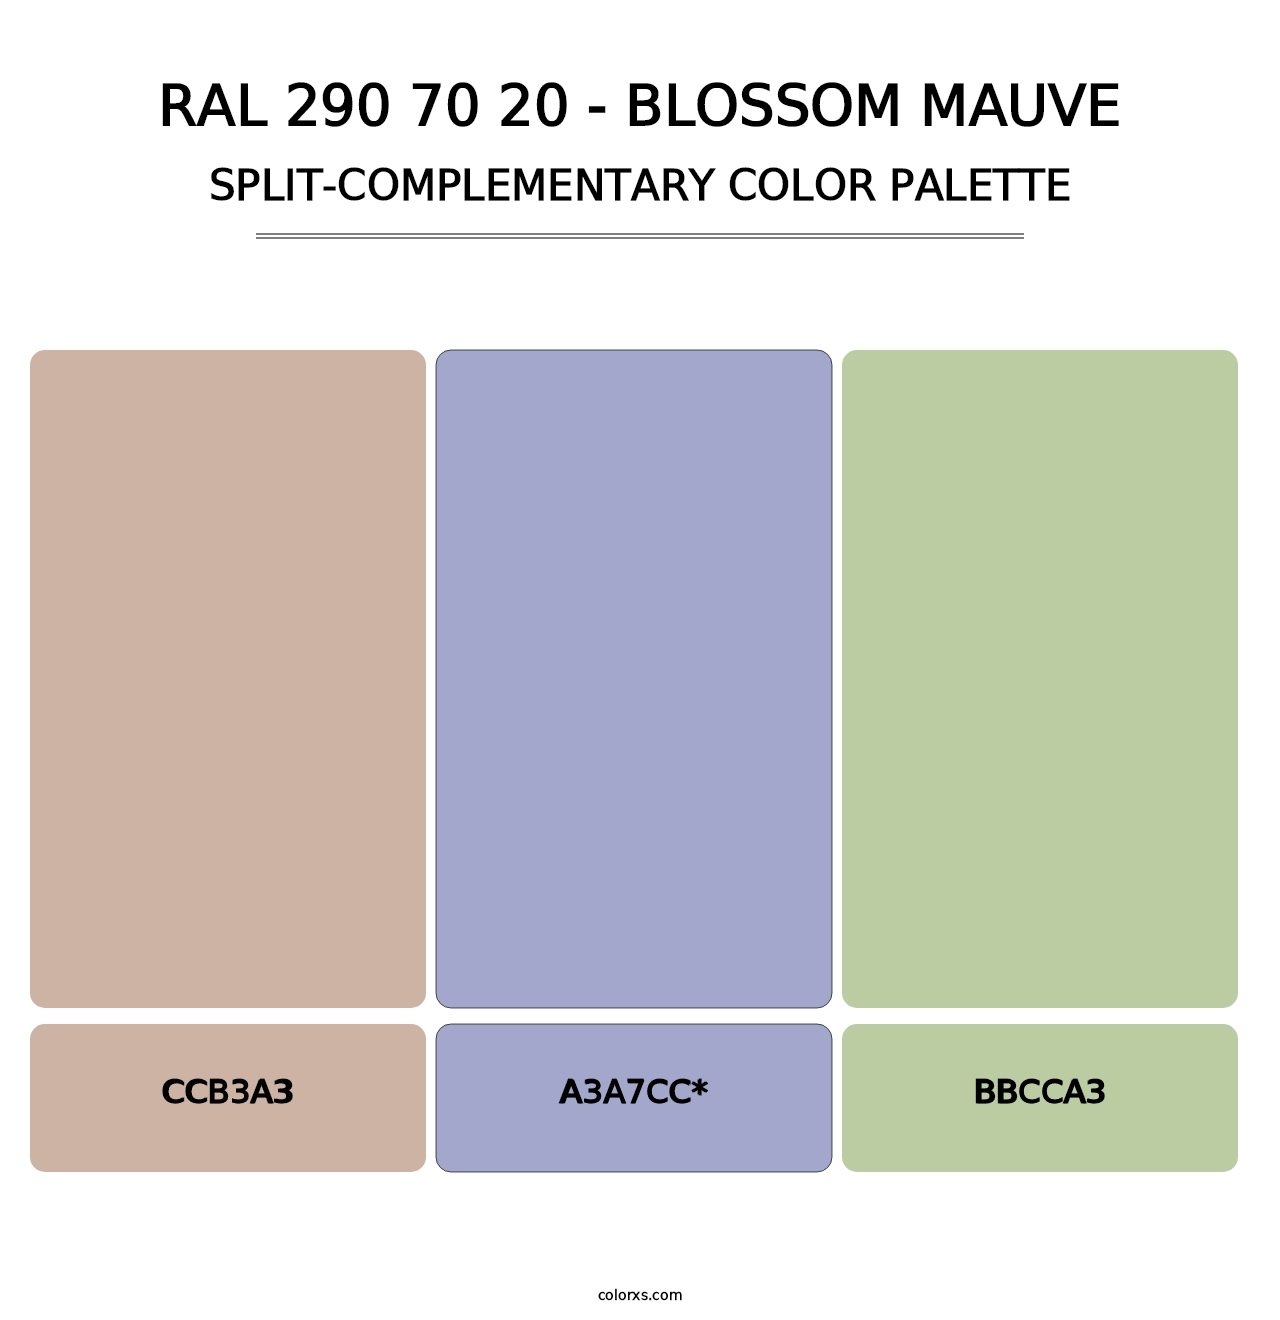 RAL 290 70 20 - Blossom Mauve - Split-Complementary Color Palette